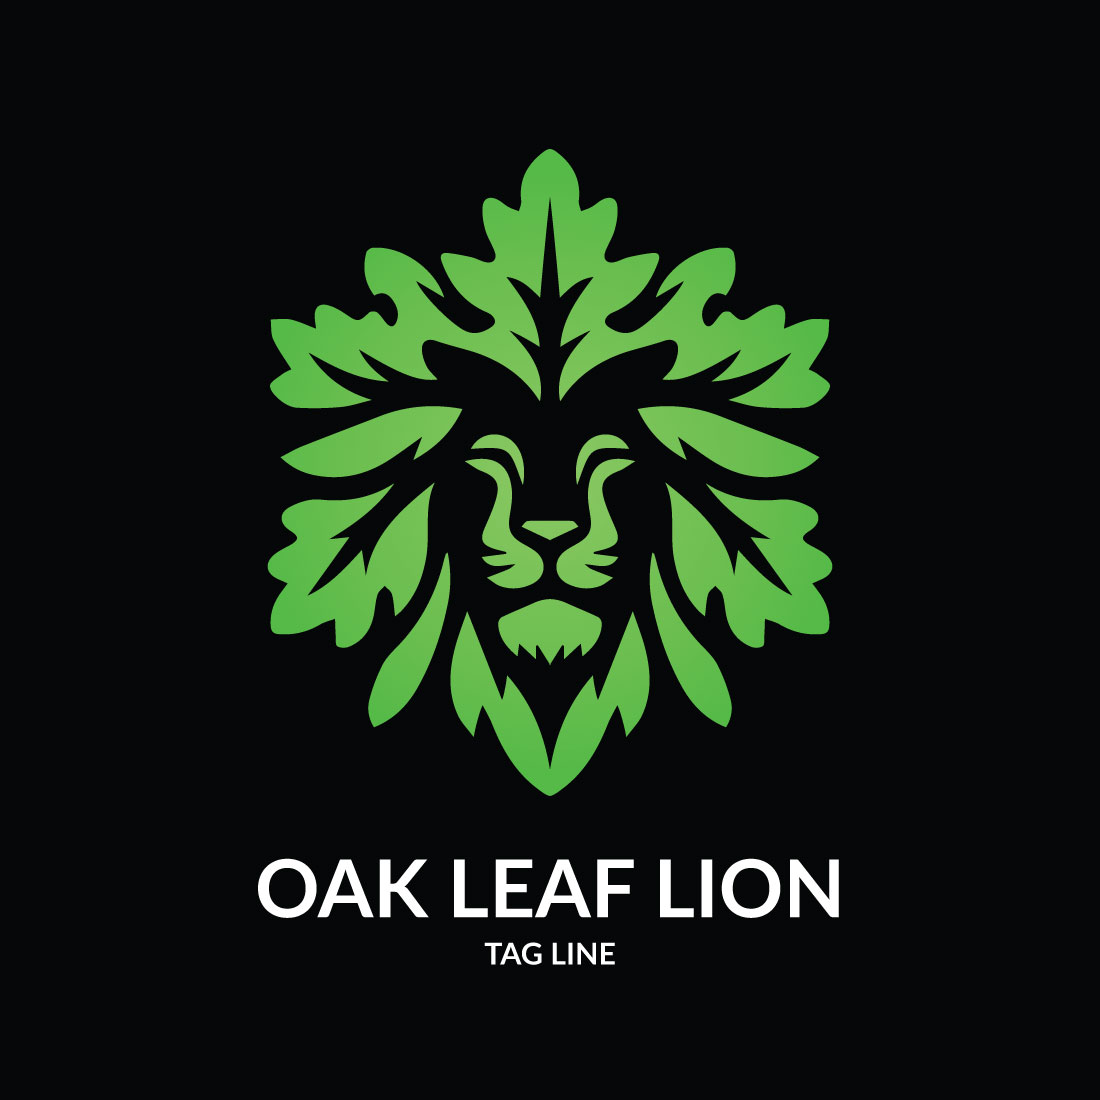 Oak Leaf Lion Logo Template cover image.